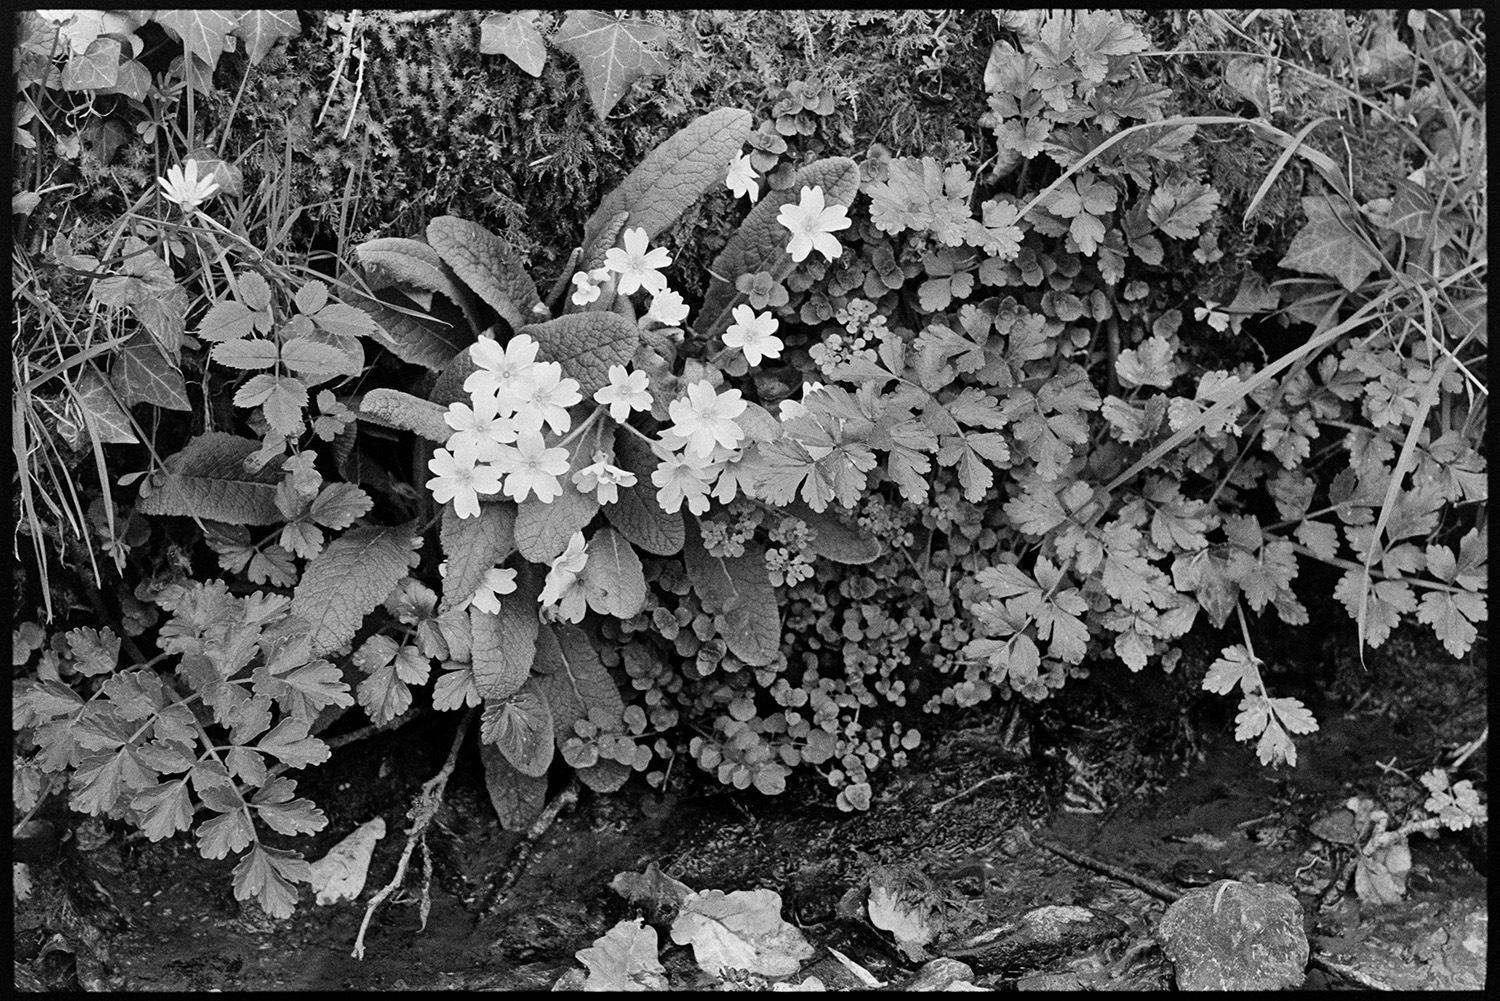 Primroses. 
[Primrose flowers in a hedge or garden at Dolton.]